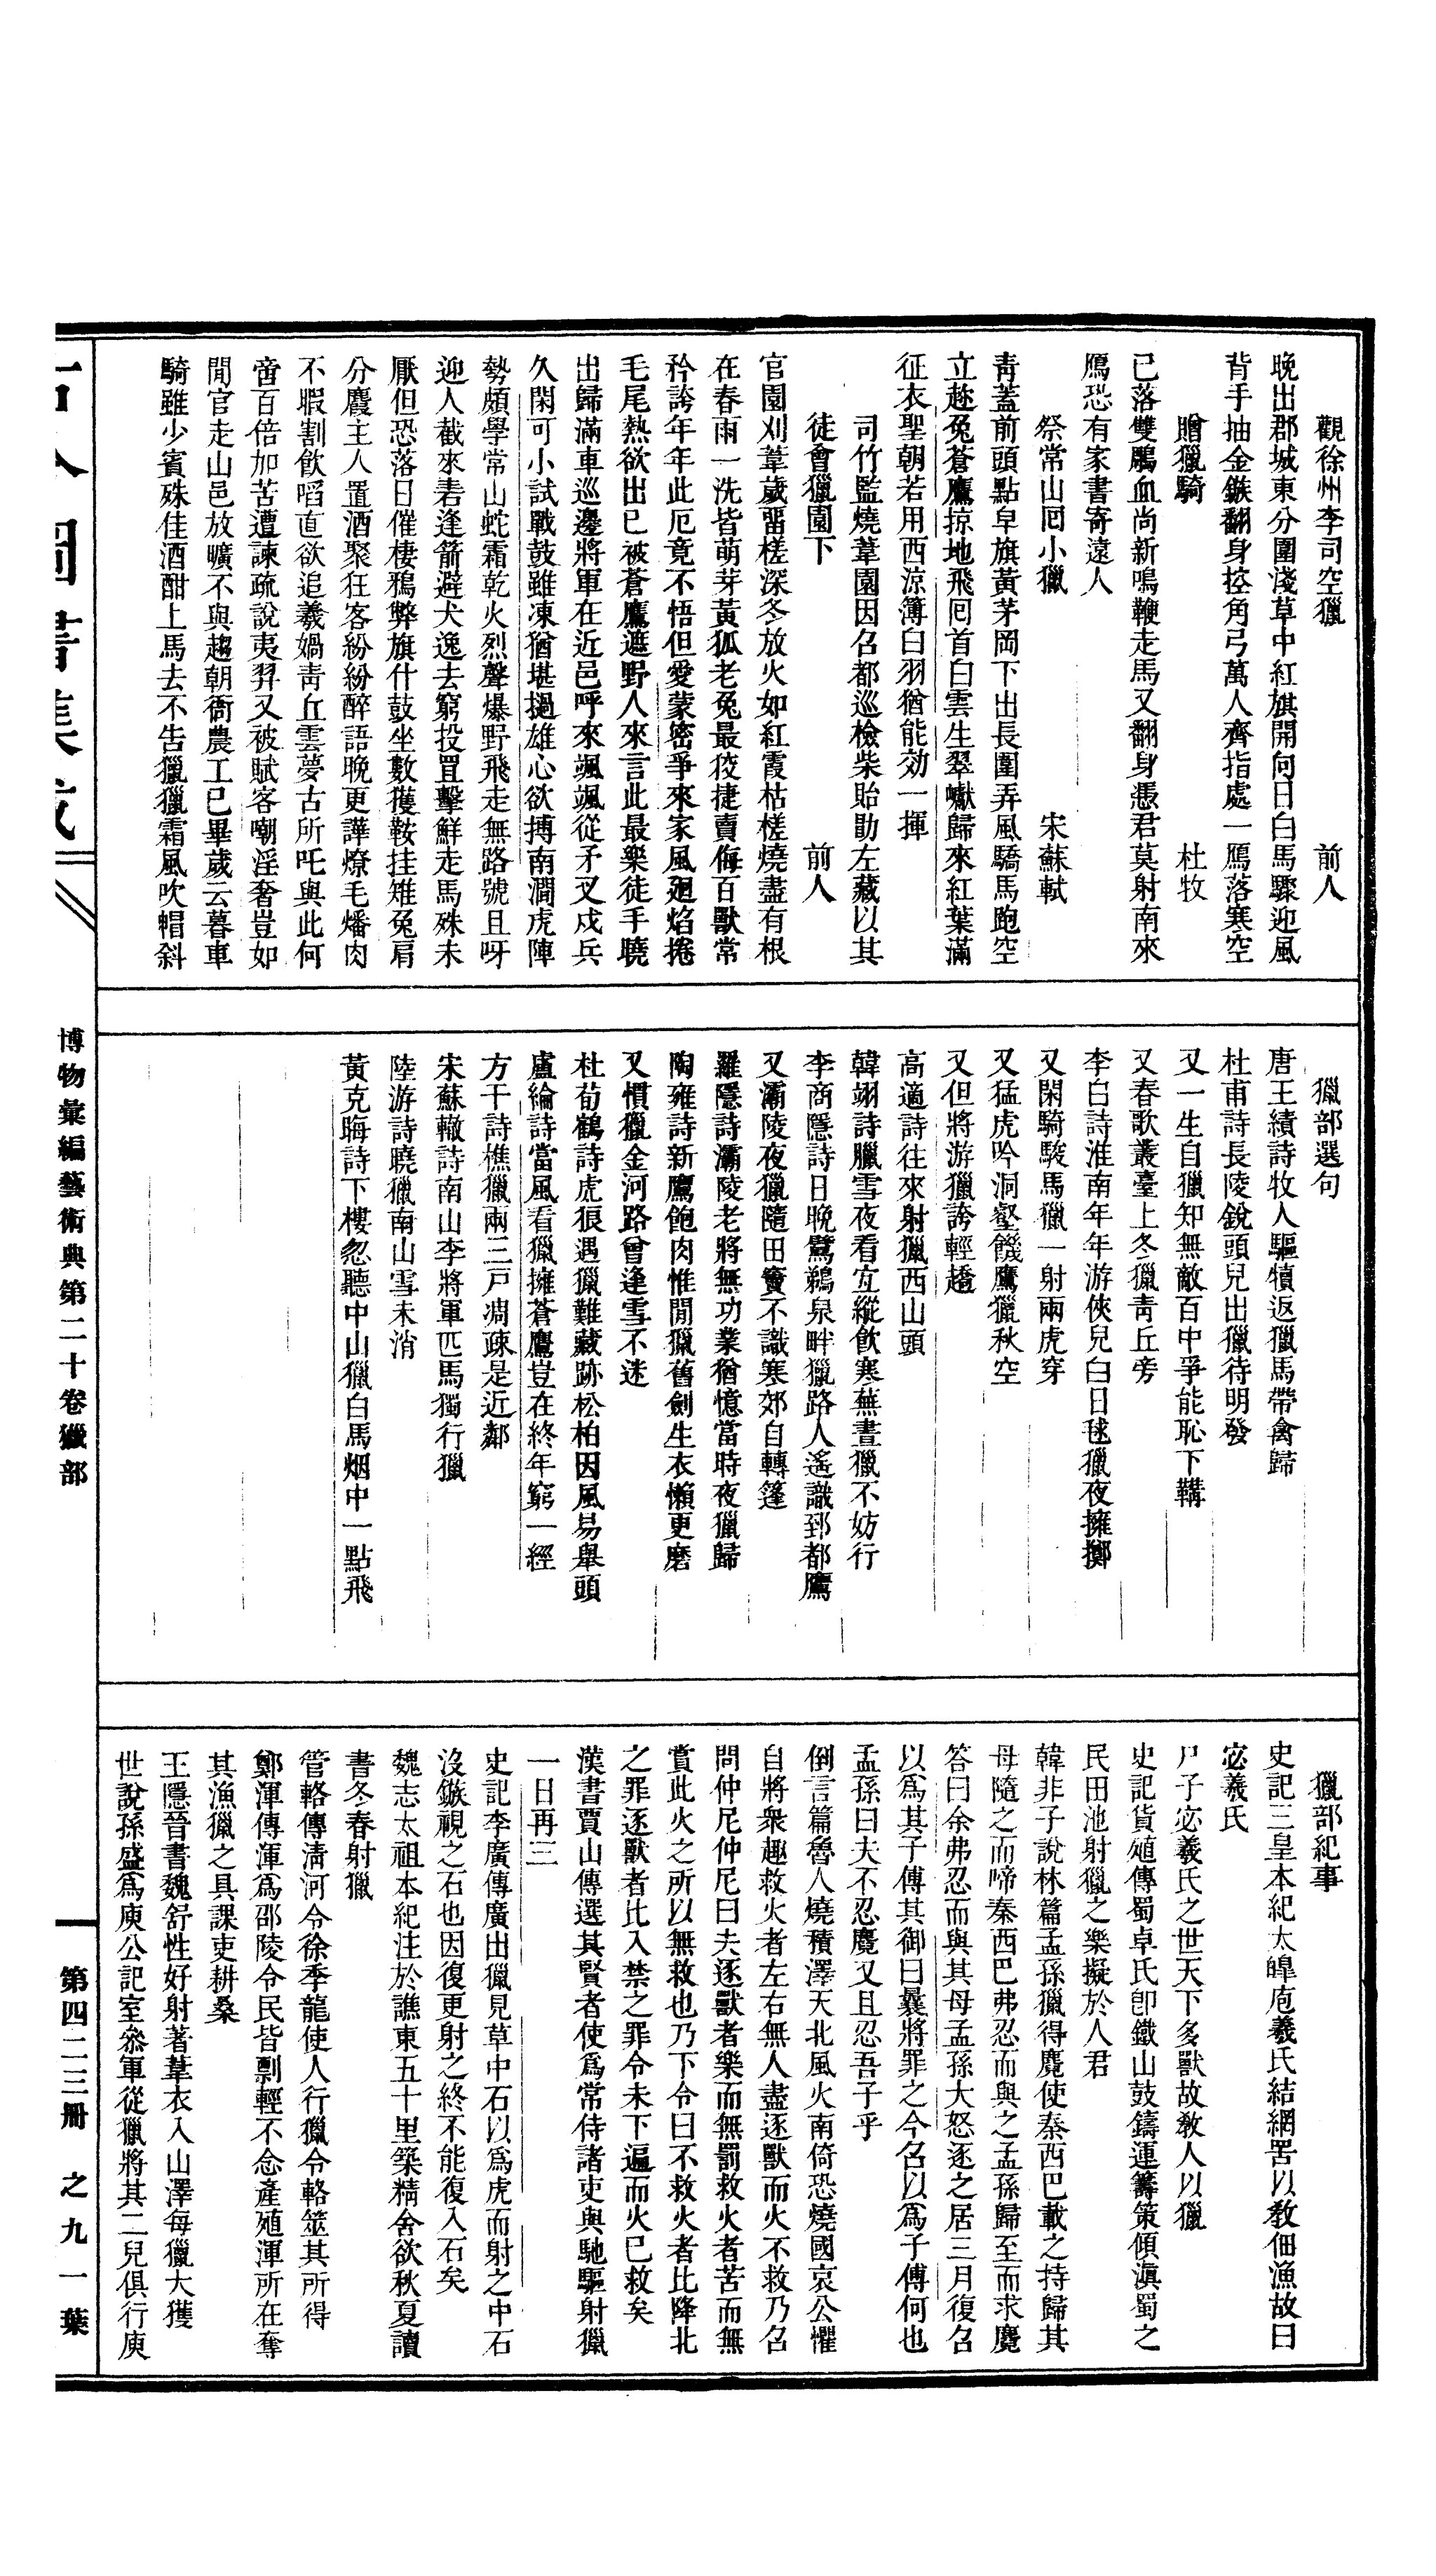 Page Gujin Tushu Jicheng Volume 423 1700 1725 Djvu 1 维基文库 自由的图书馆